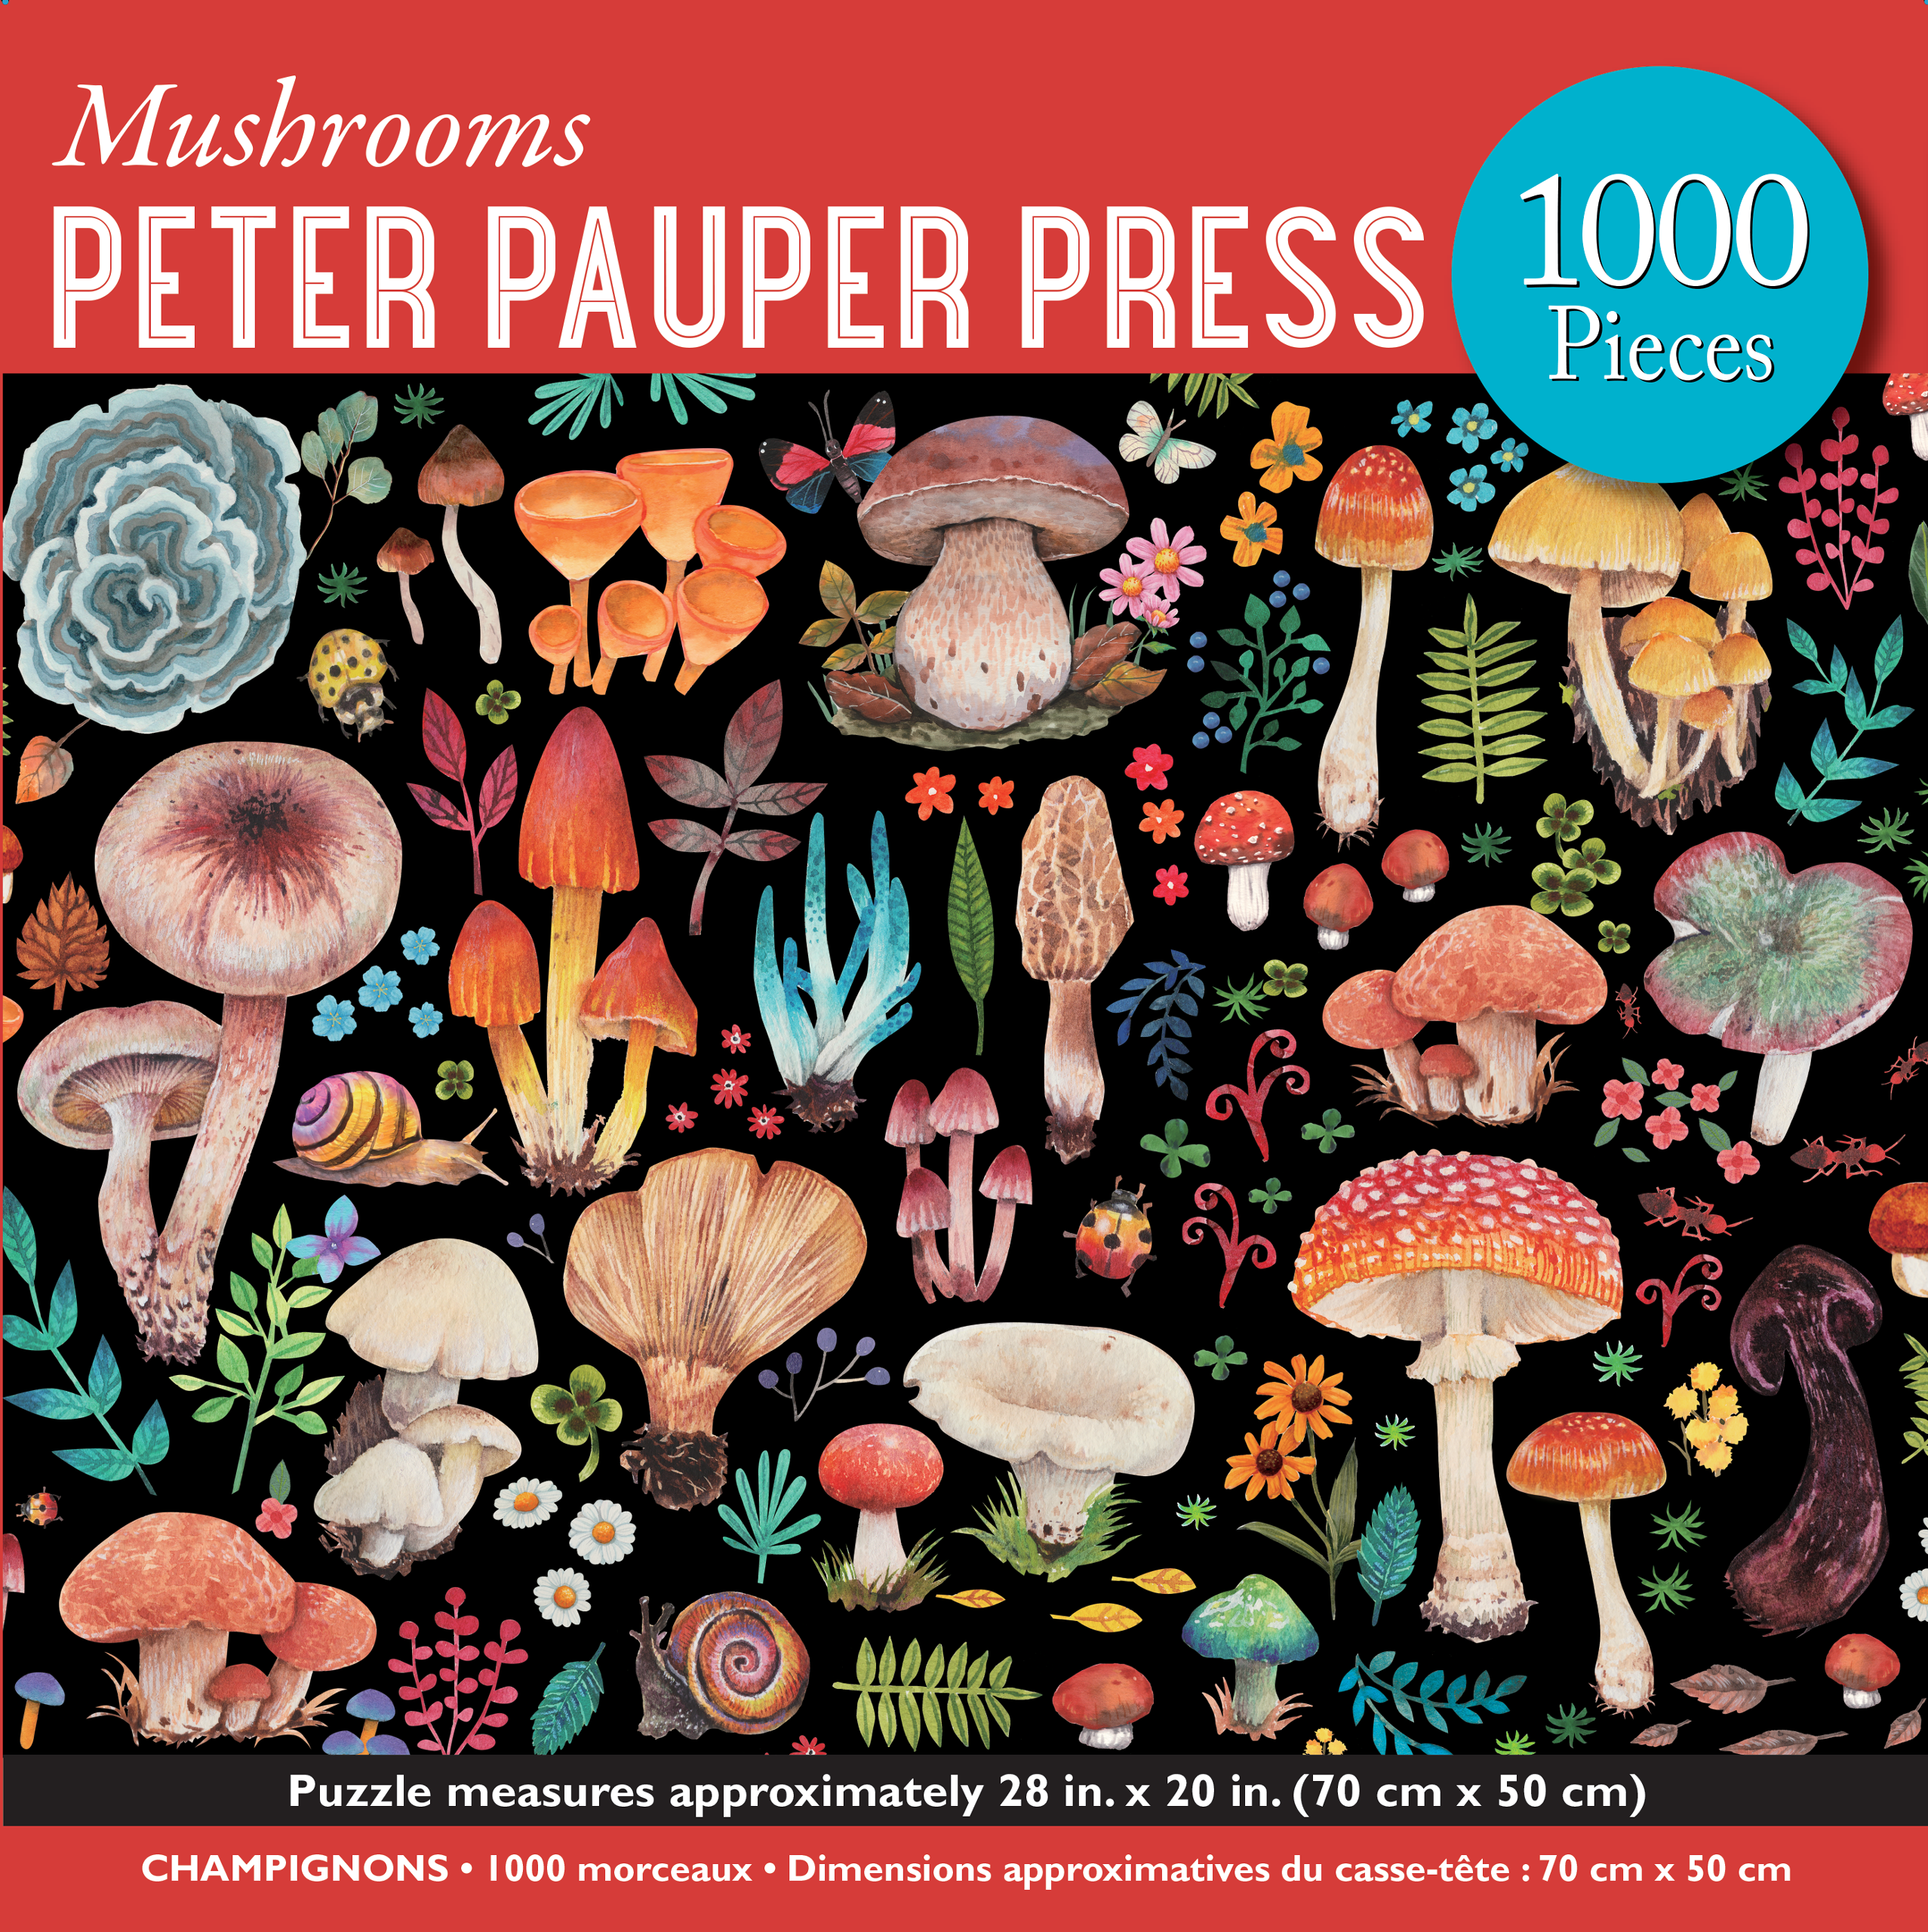 Mushrooms 1000 Piece Jigsaw Puzzle – Peter Pauper Press